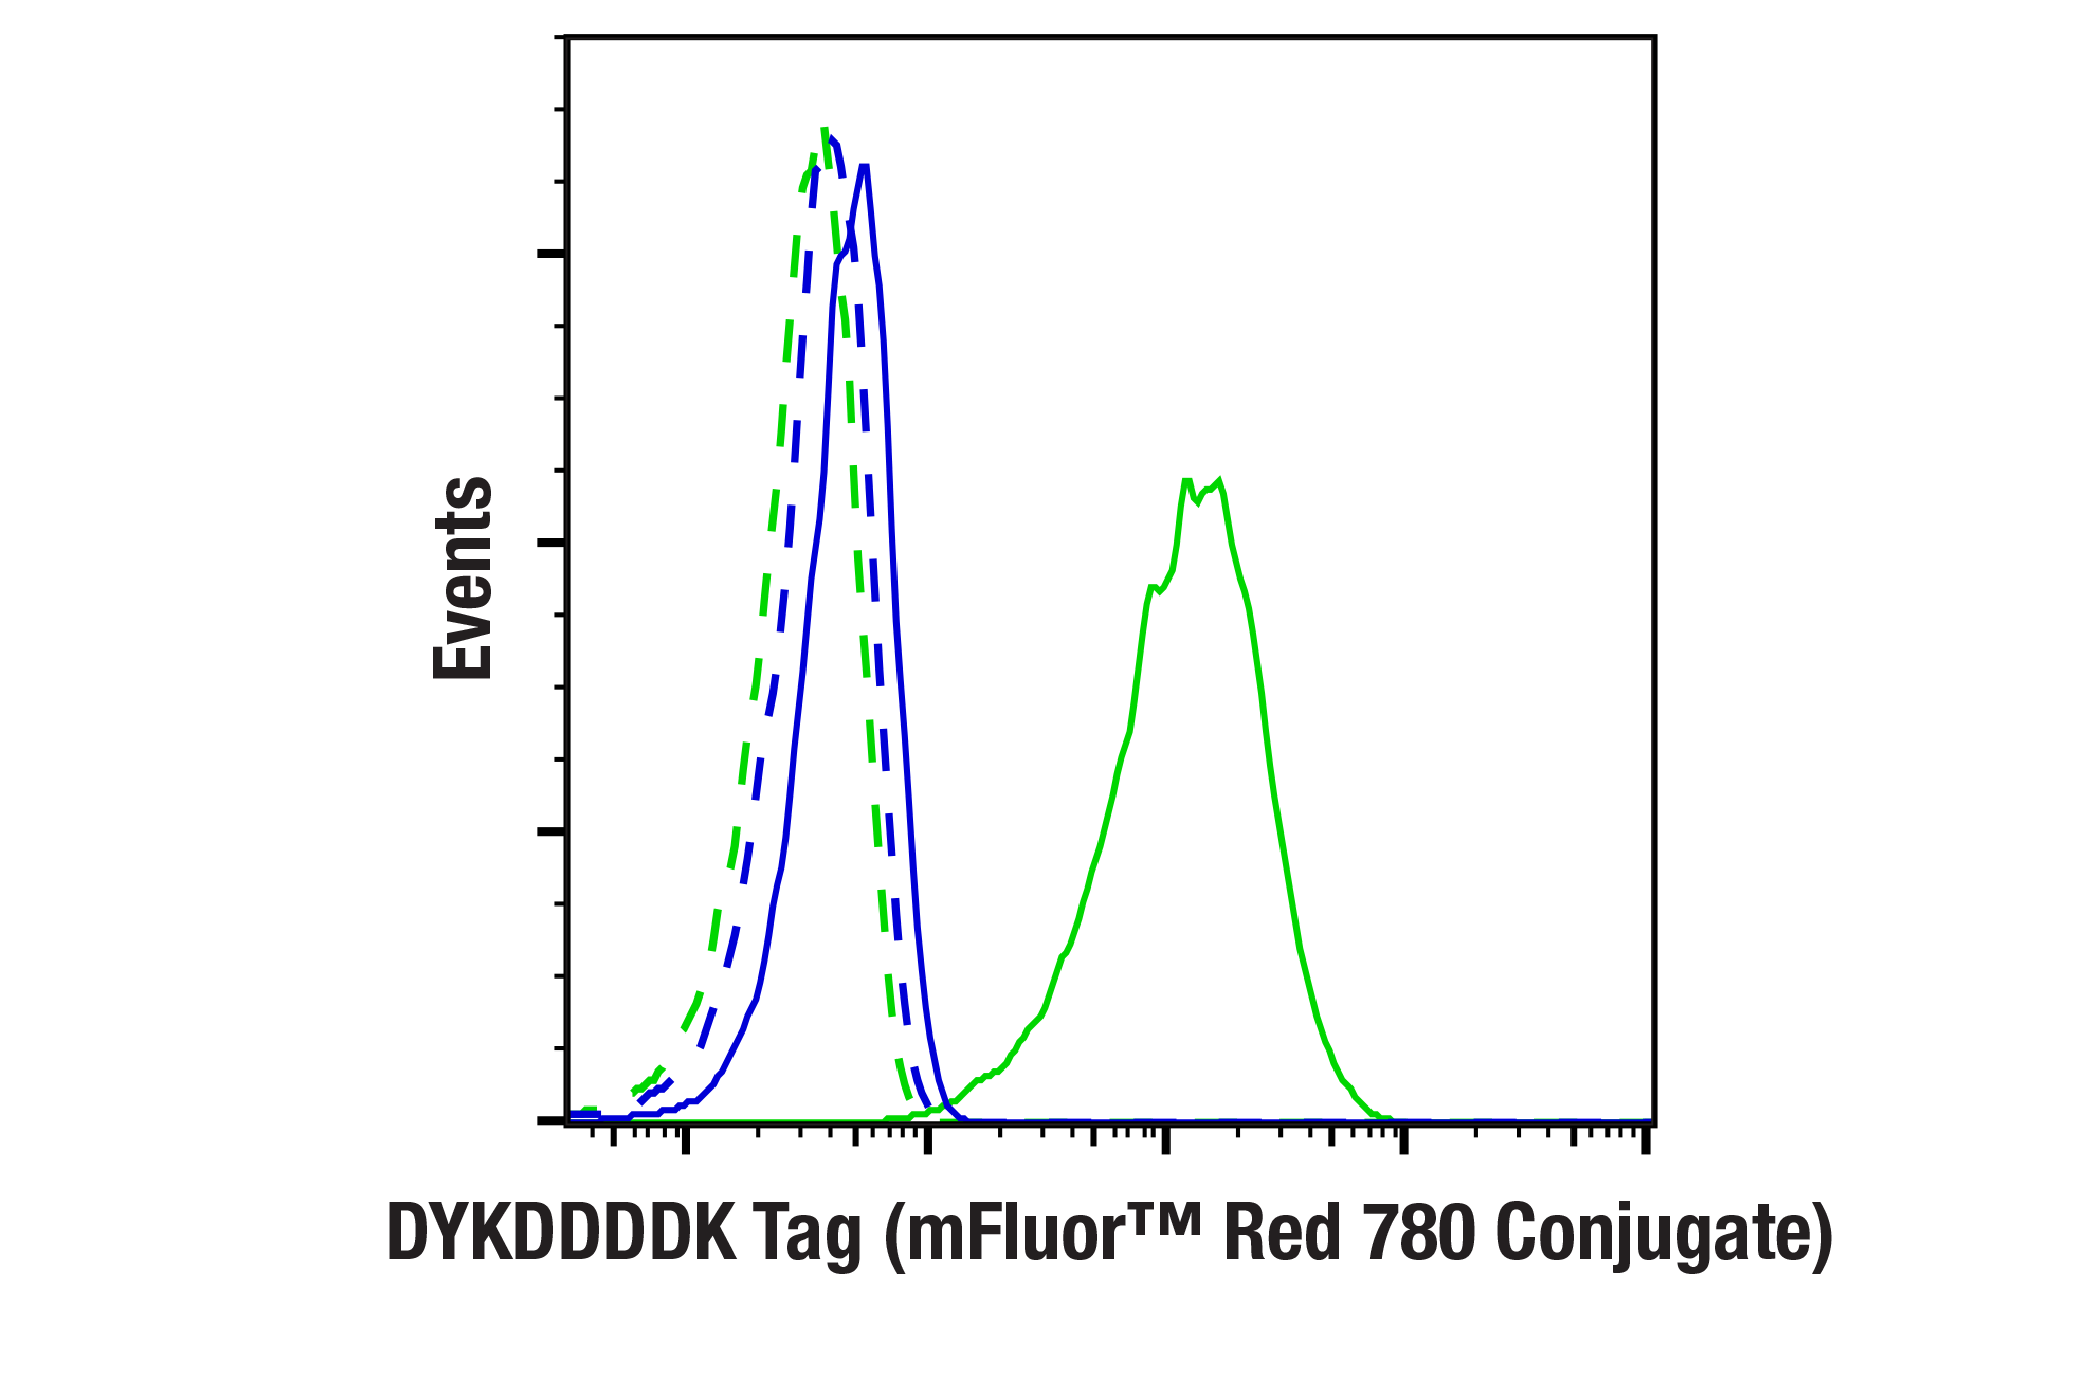 Flow Cytometry Image 1: DYKDDDDK Tag (D6W5B) Rabbit mAb (Binds to same epitope as Sigma-Aldrich Anti-FLAG M2 antibody) (mFluor™ Red 780 Conjugate)